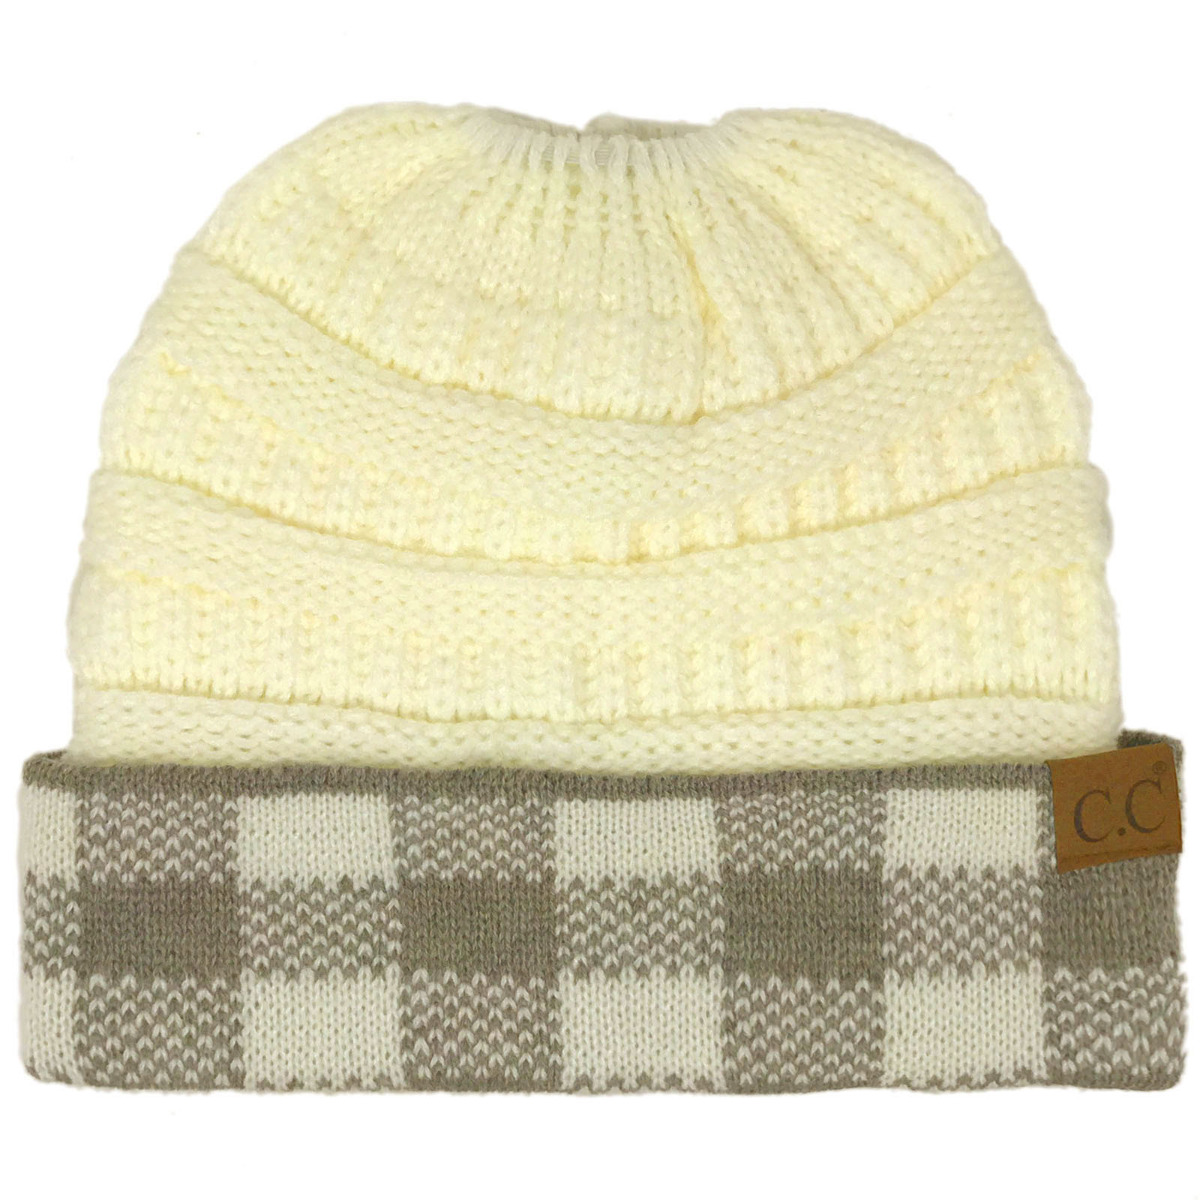 CC Ponytail Messy Bun BeanieTail Soft Winter Knit Stretch Beanie Hat (Buffalo Plaid White/Lt. Melange Gray) - image 2 of 2